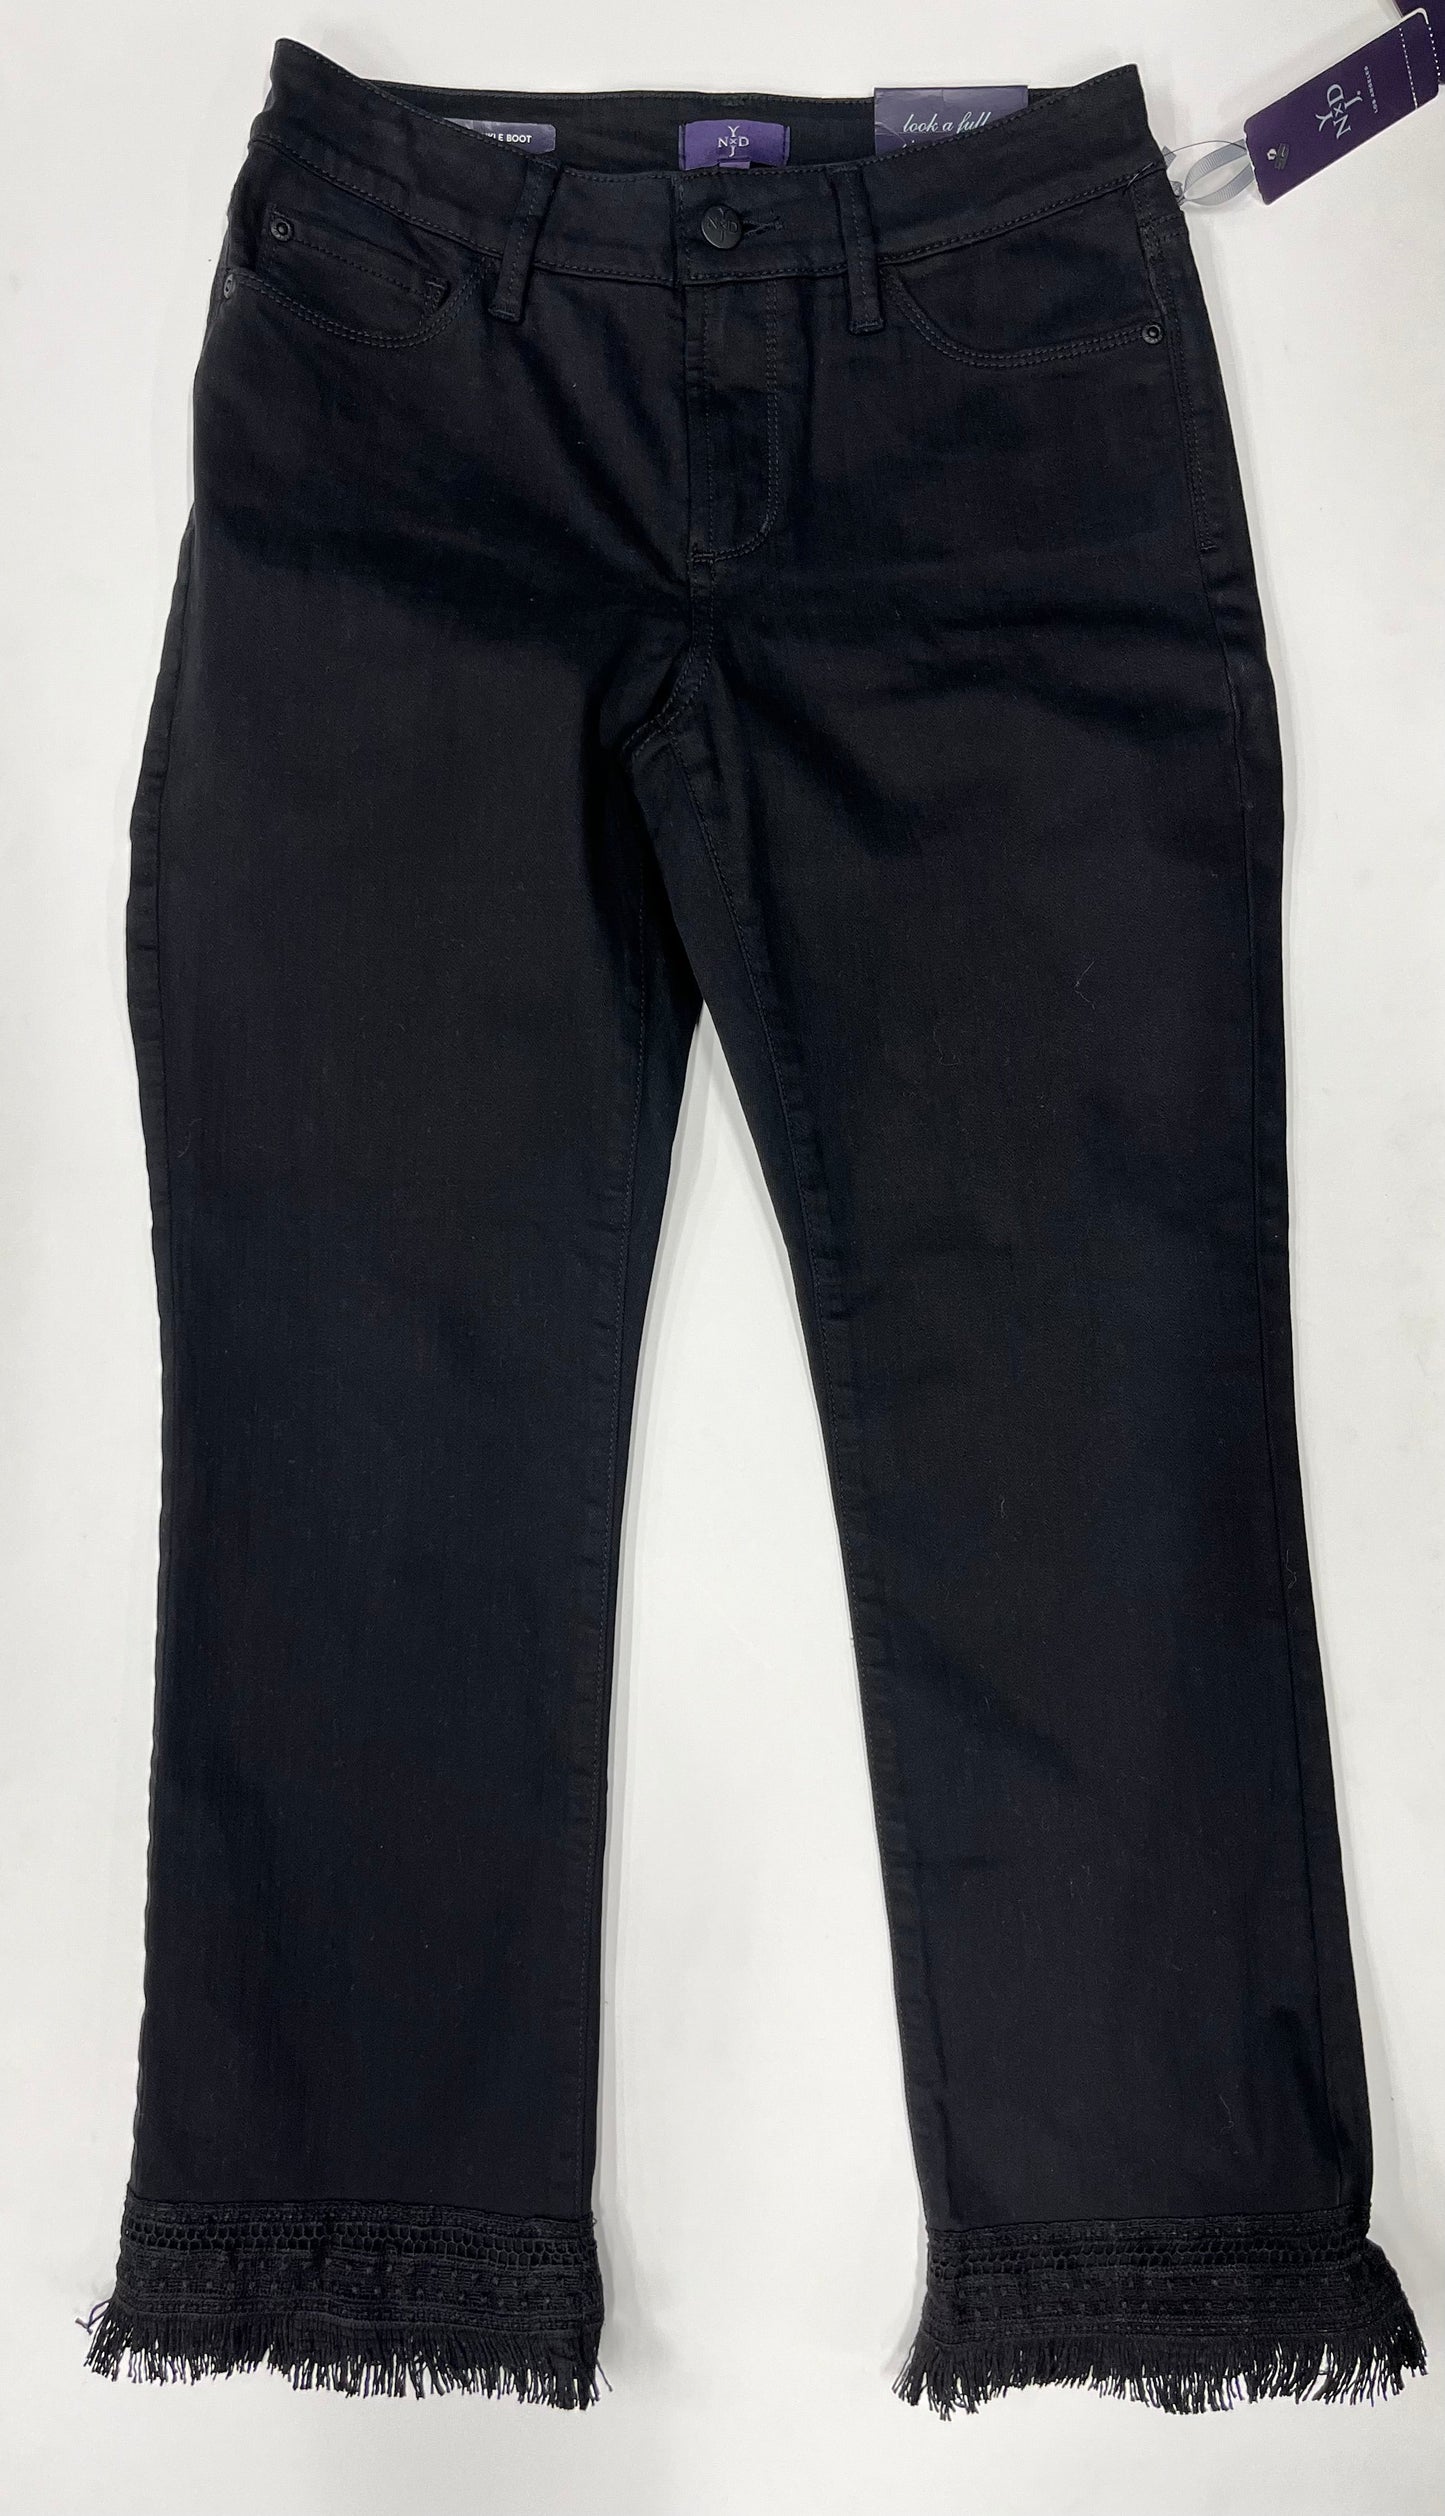 Jeans By NYDJ NWT  Size: 0